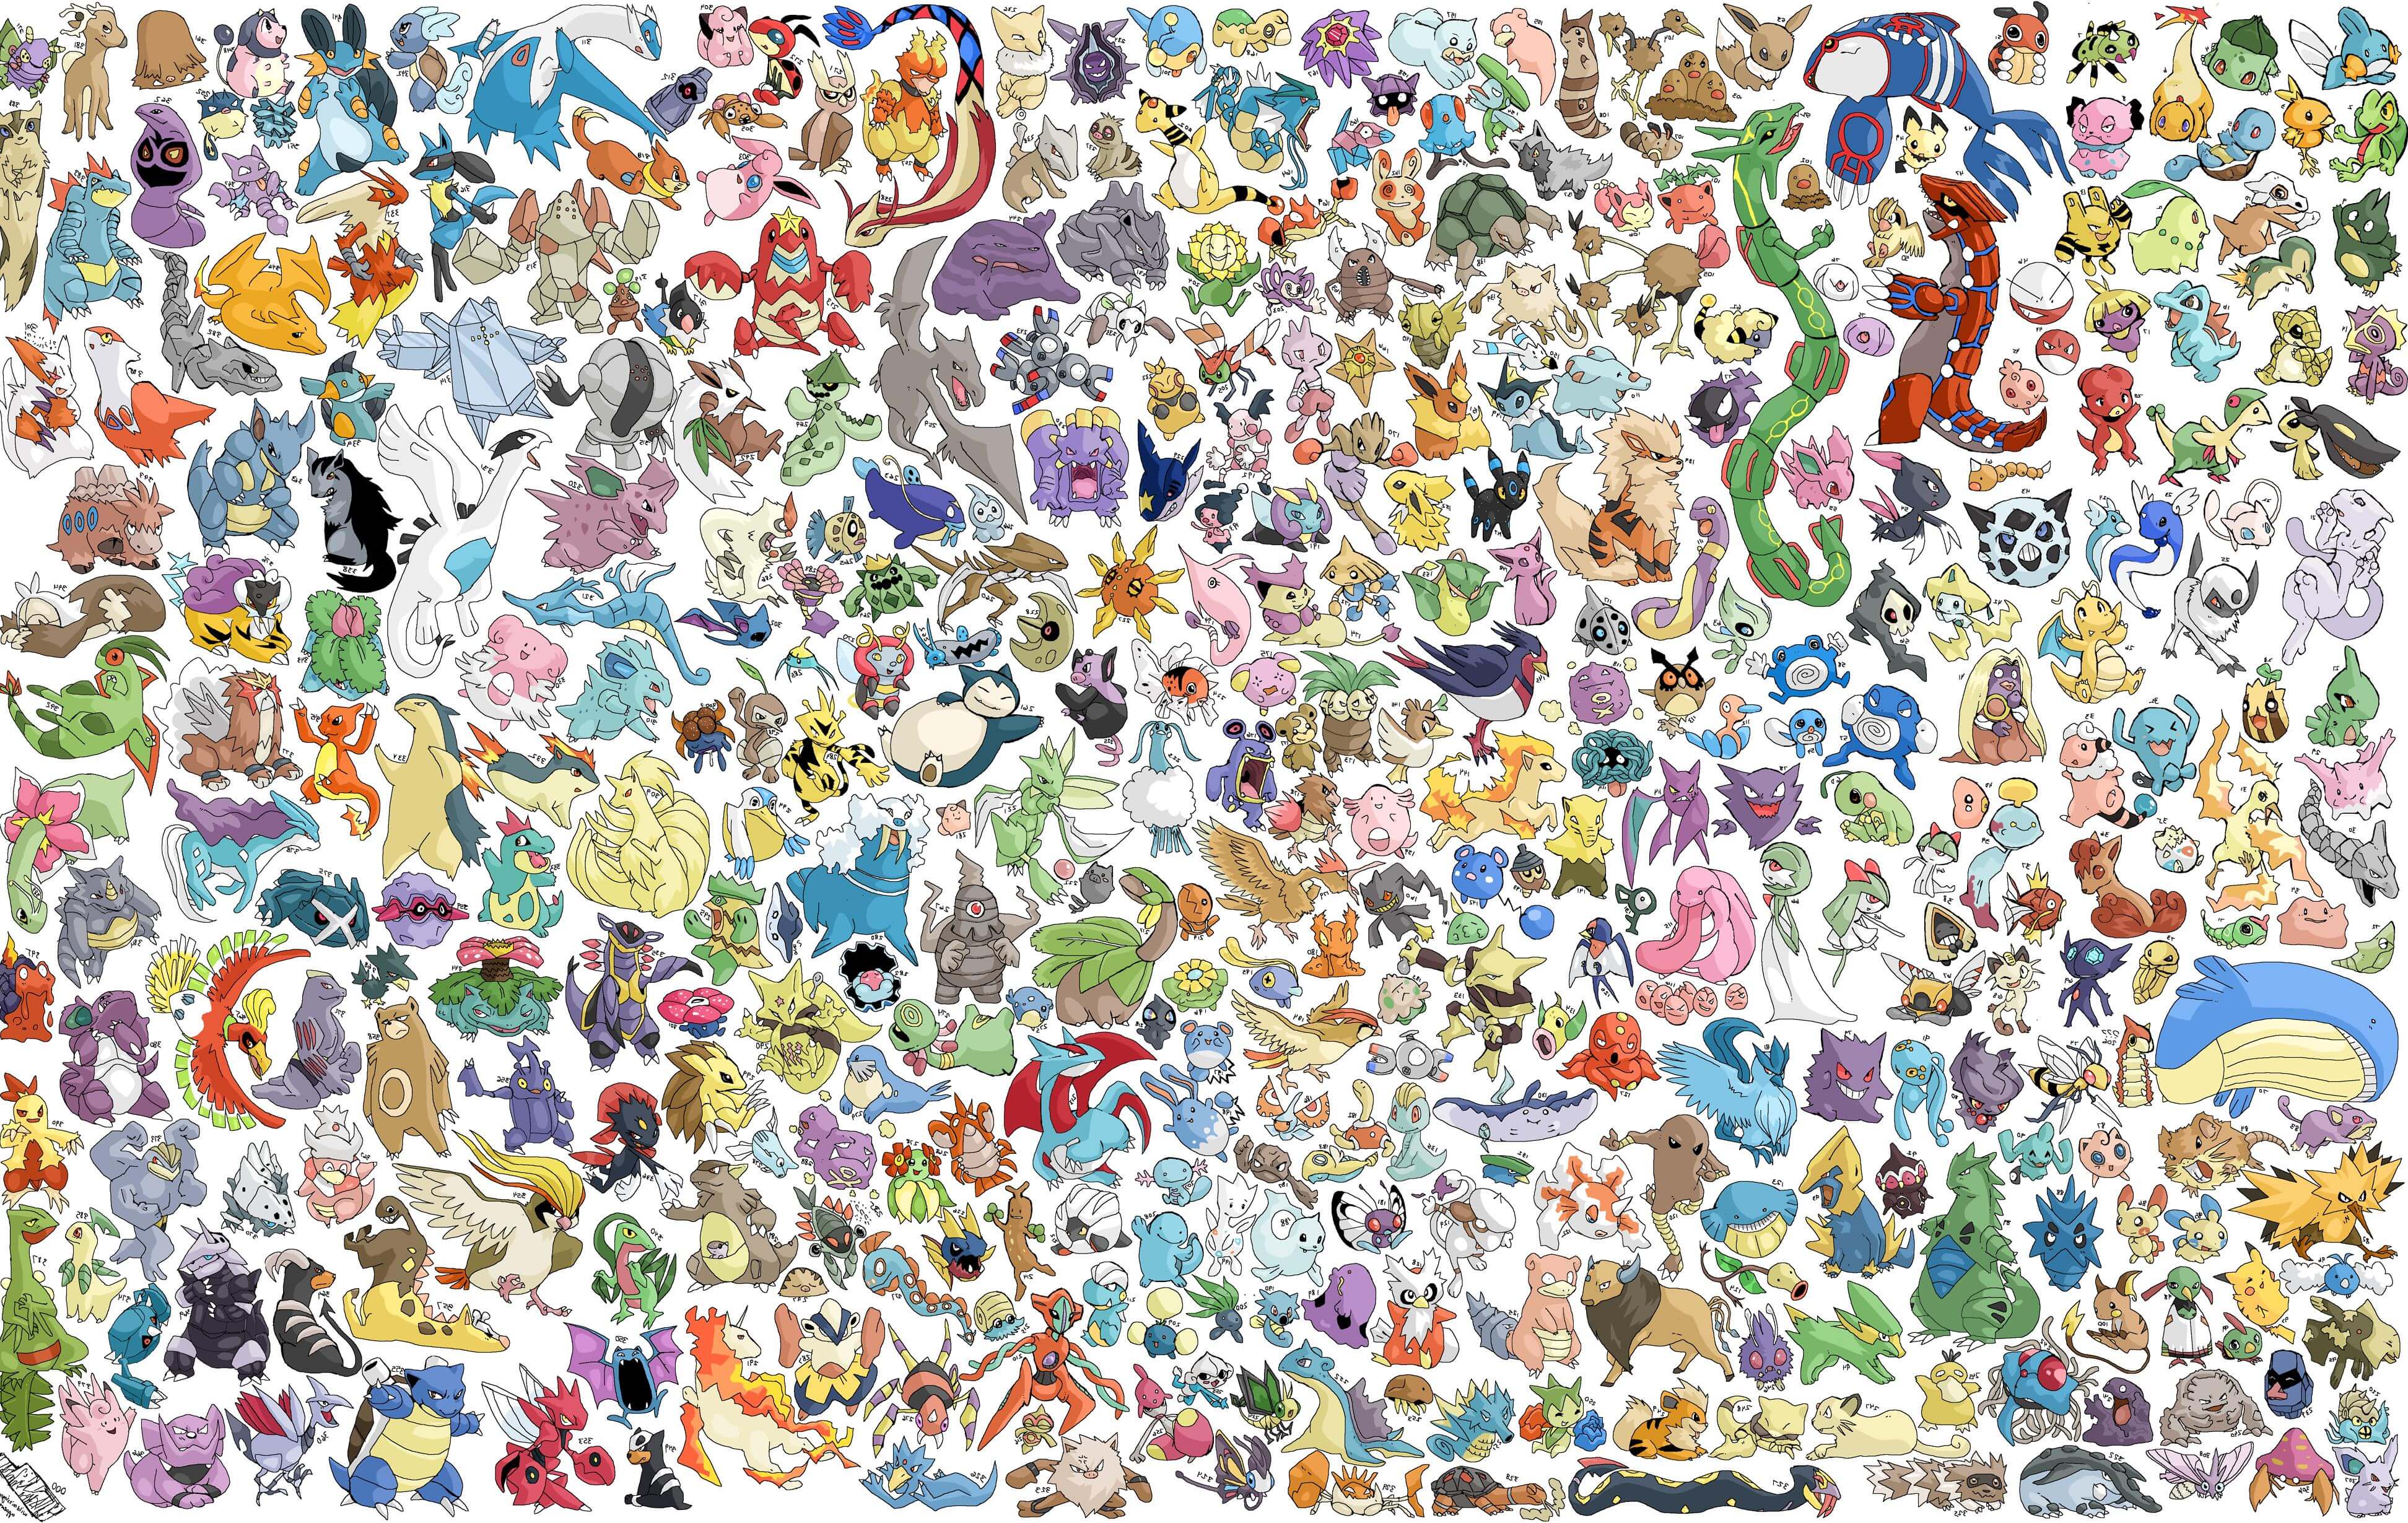 All-Pokemon-Wallpaper-Hd.jpg